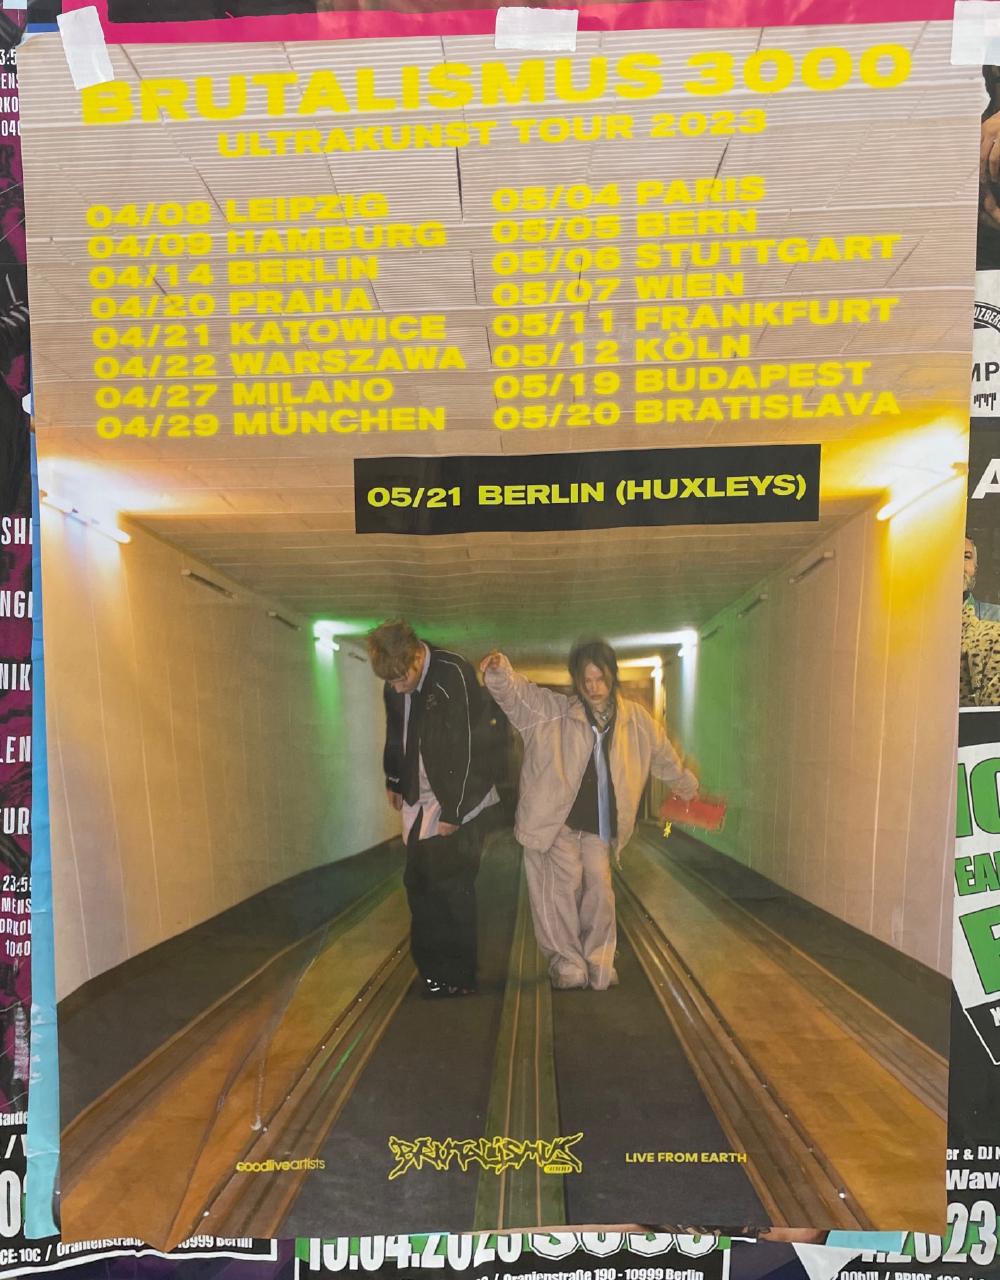 A poster for Brutalismus 3000 gig dates